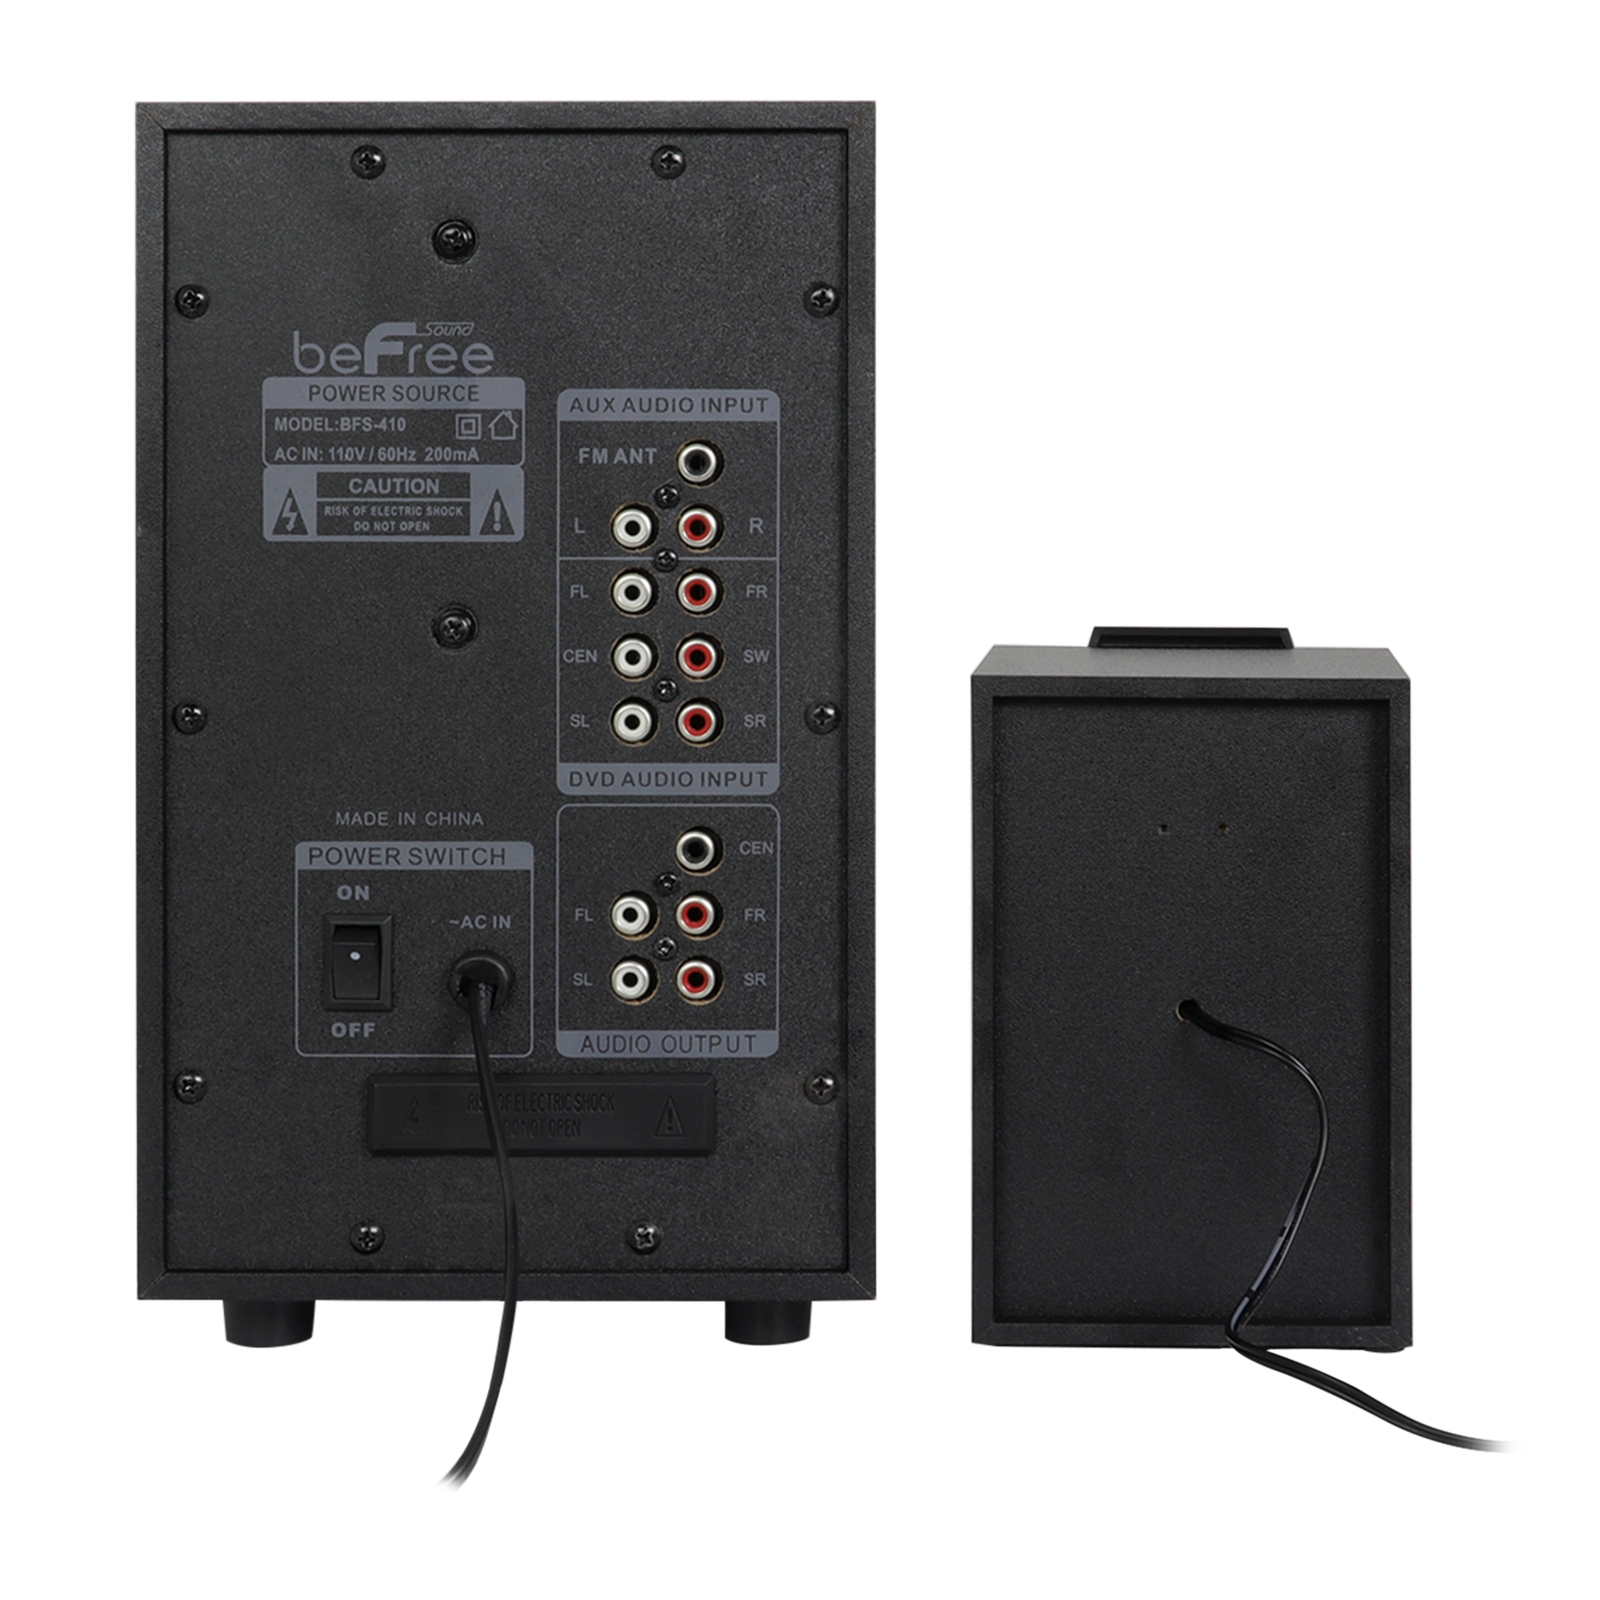 beFree Sound BFS-410 5.1 Channel Surround Sound Bluetooth Speaker System in Red - image 5 of 6